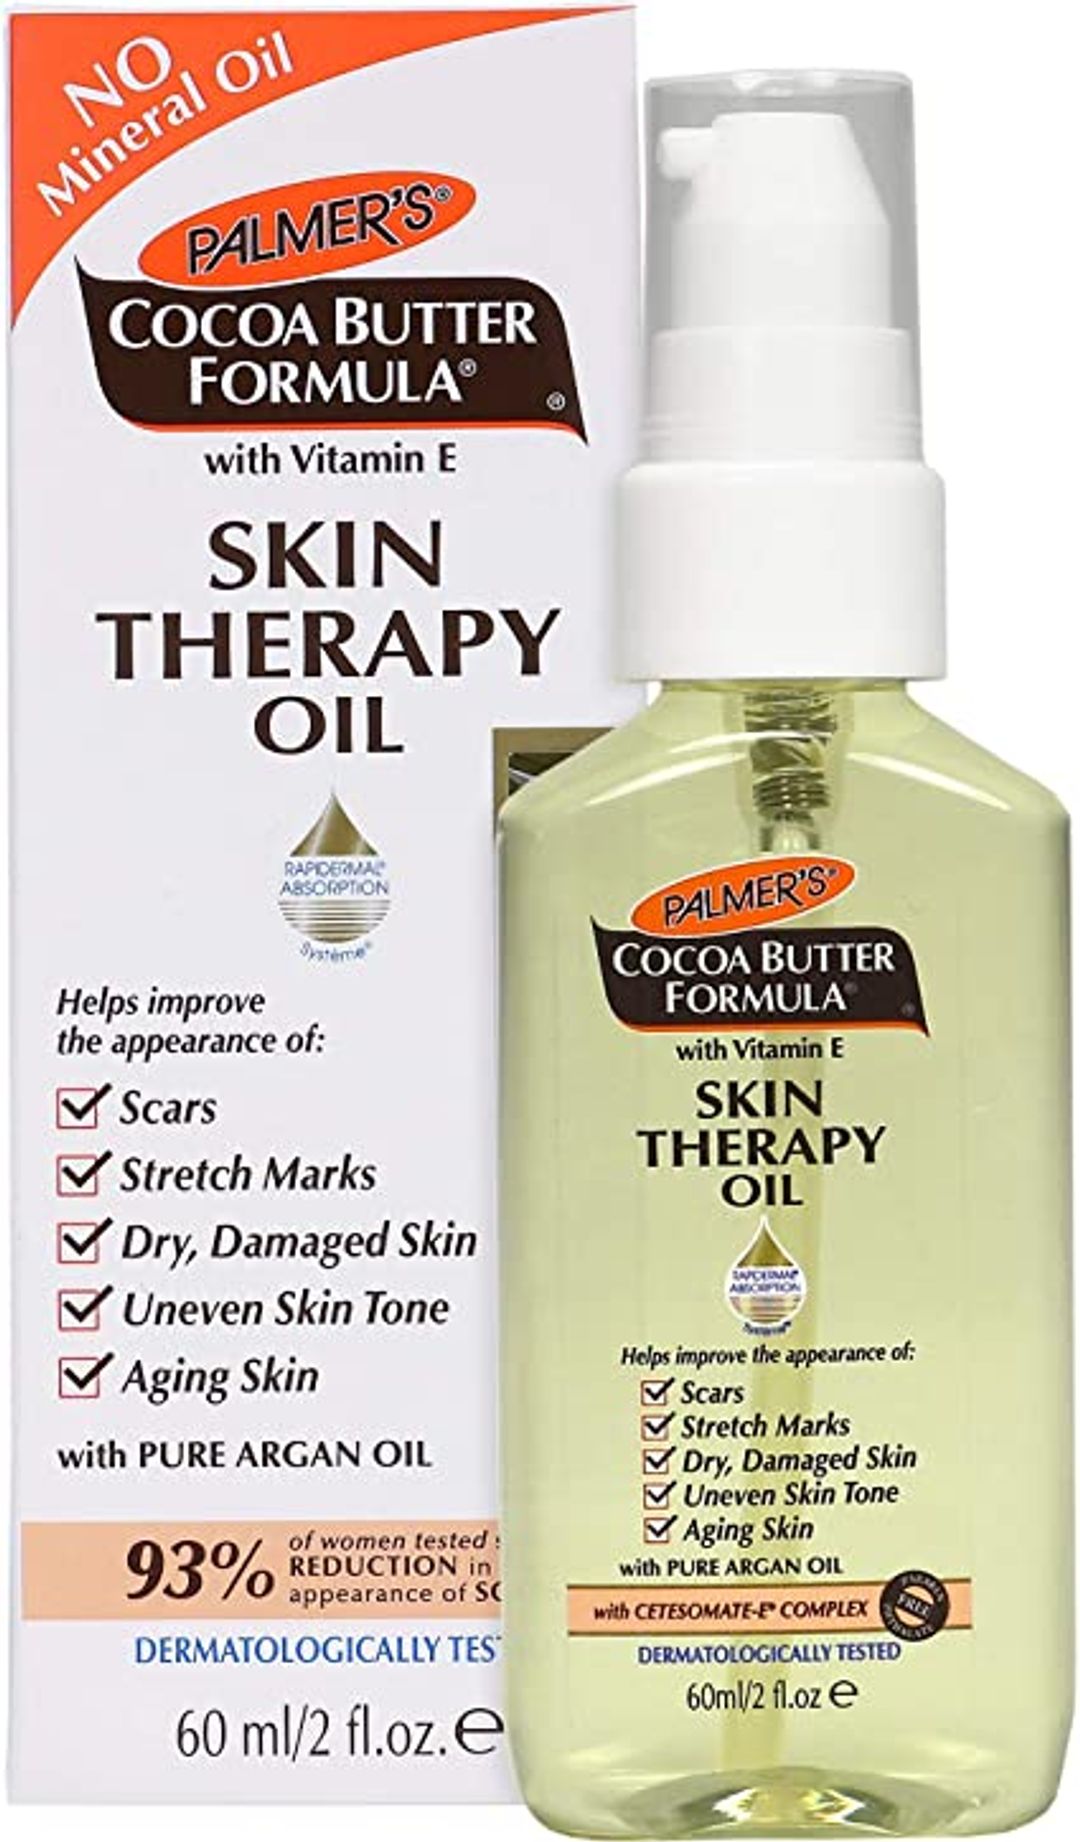 Palmer's Cocoa Butter Skin Therapy Oil - 60ml